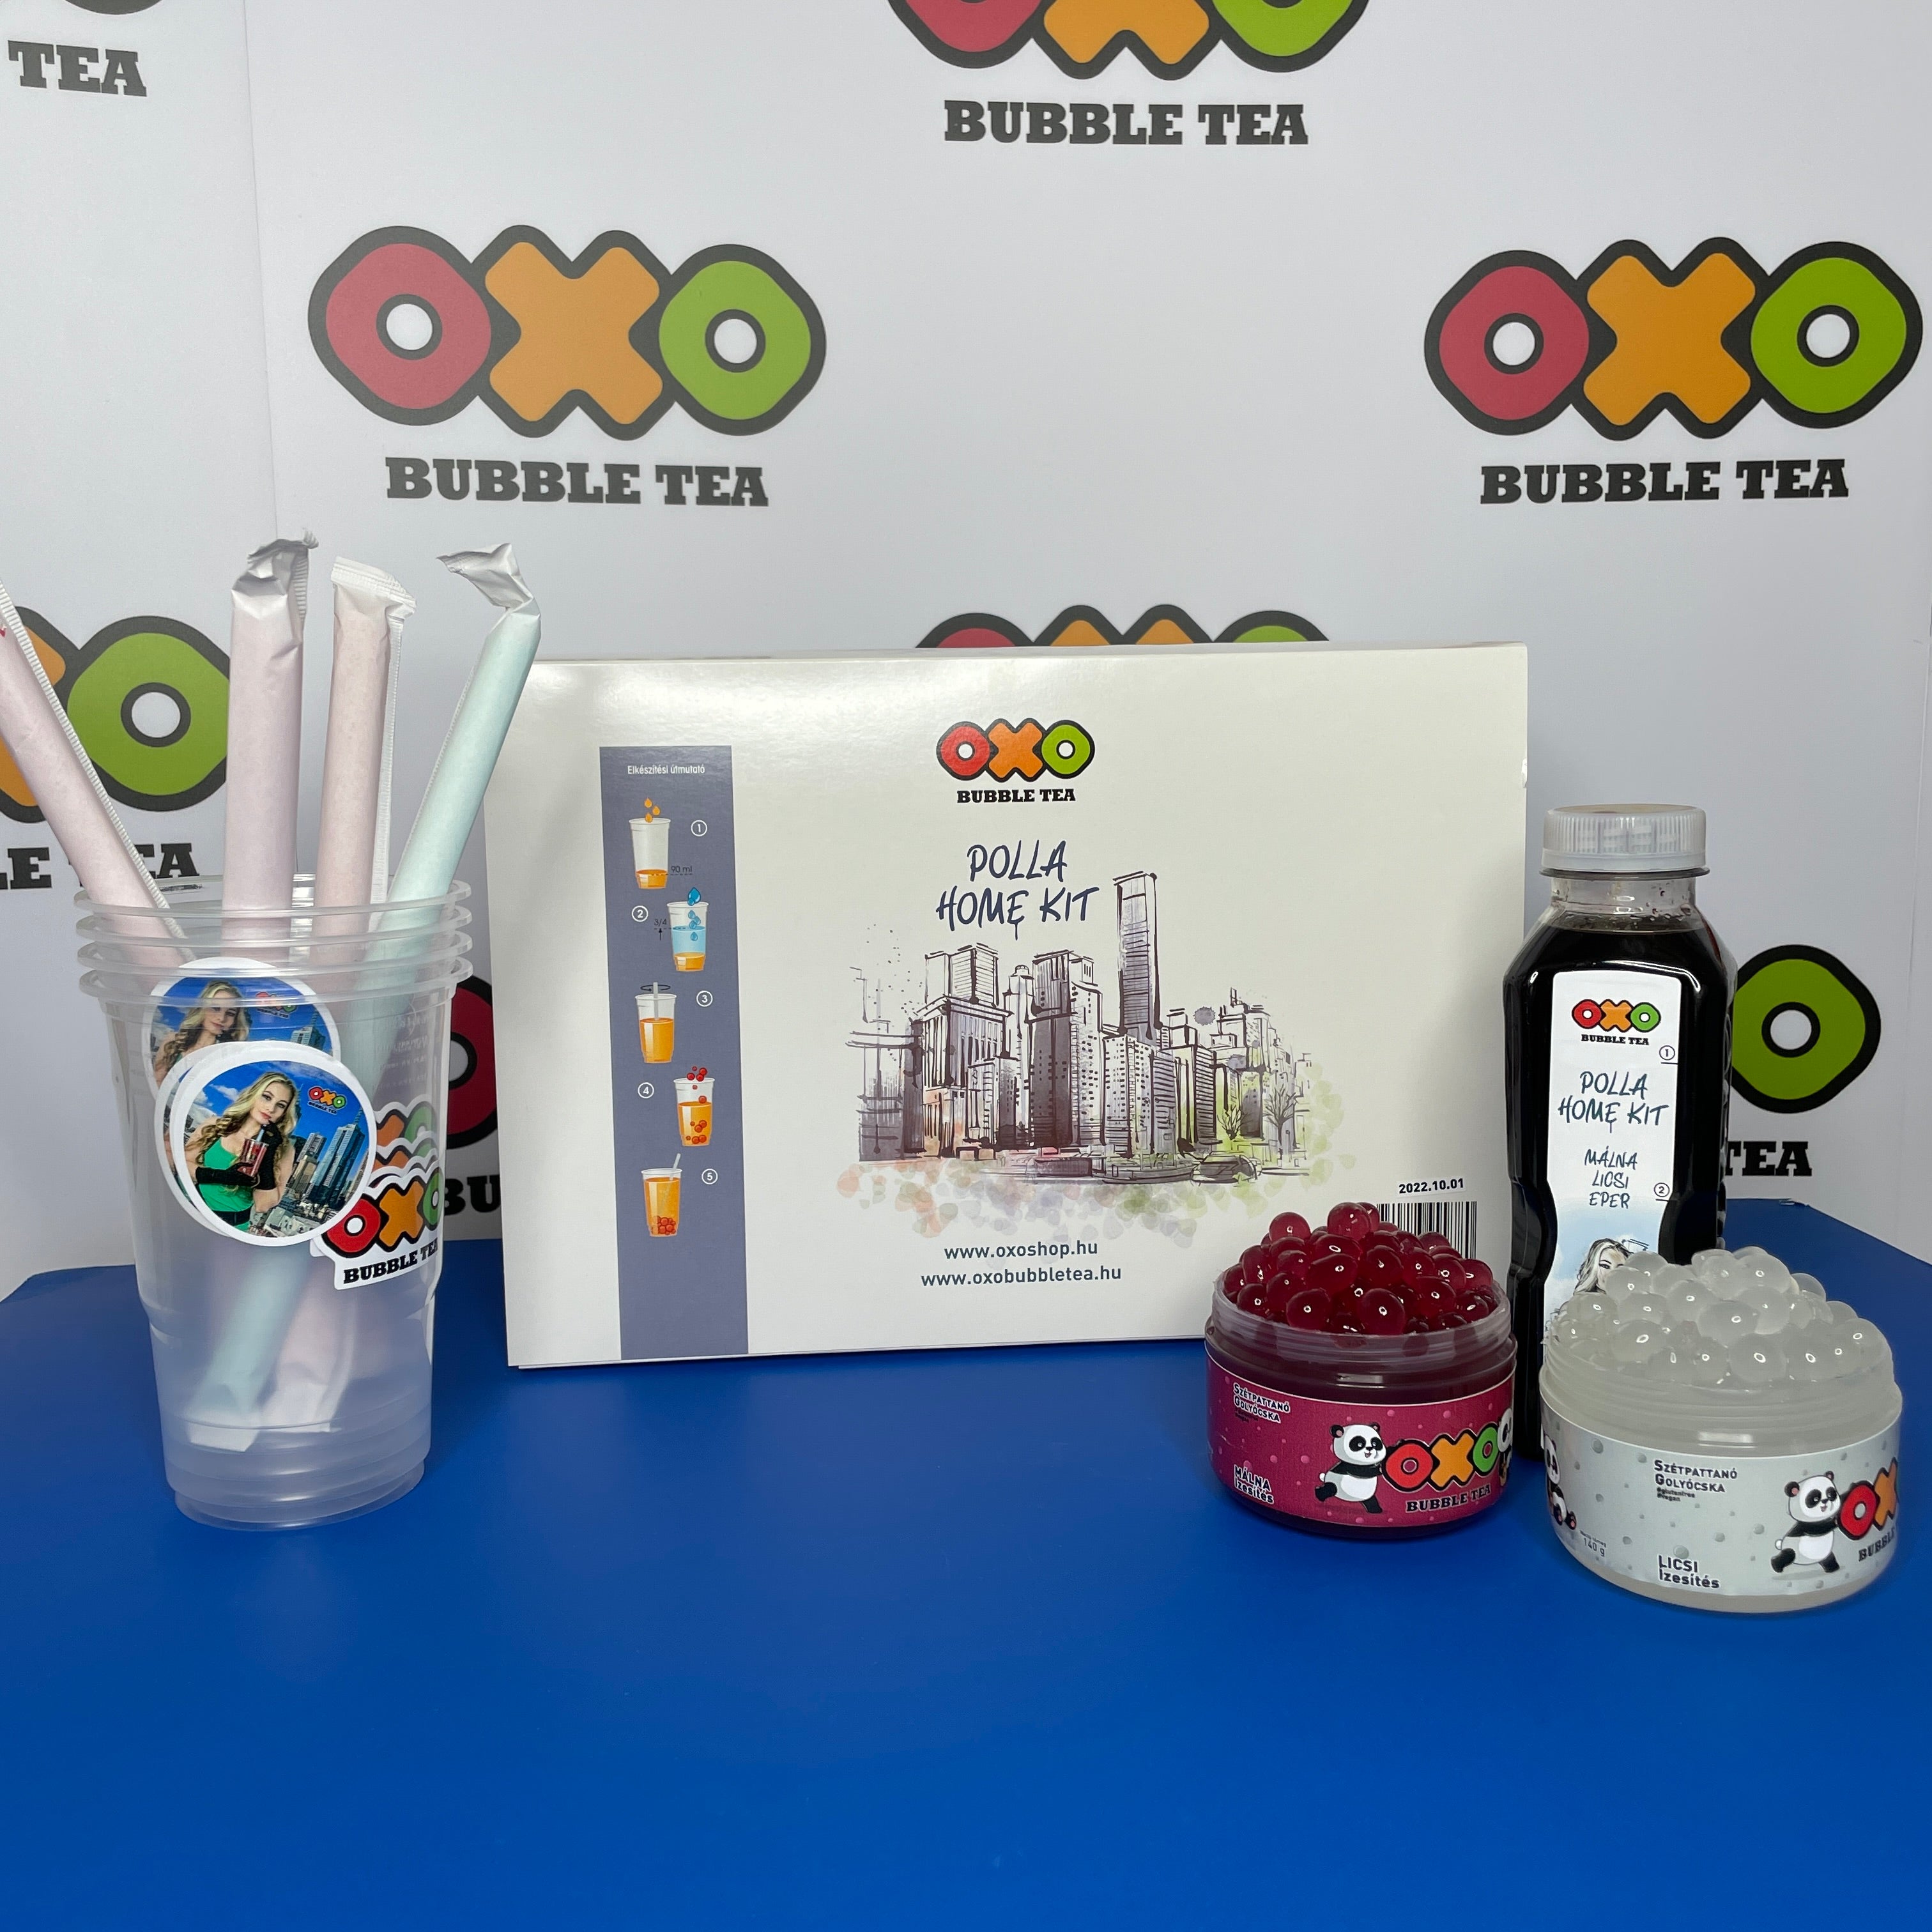 OXO Bubble Tea Polla Home Kit - WWW.OXOSHOP.HU